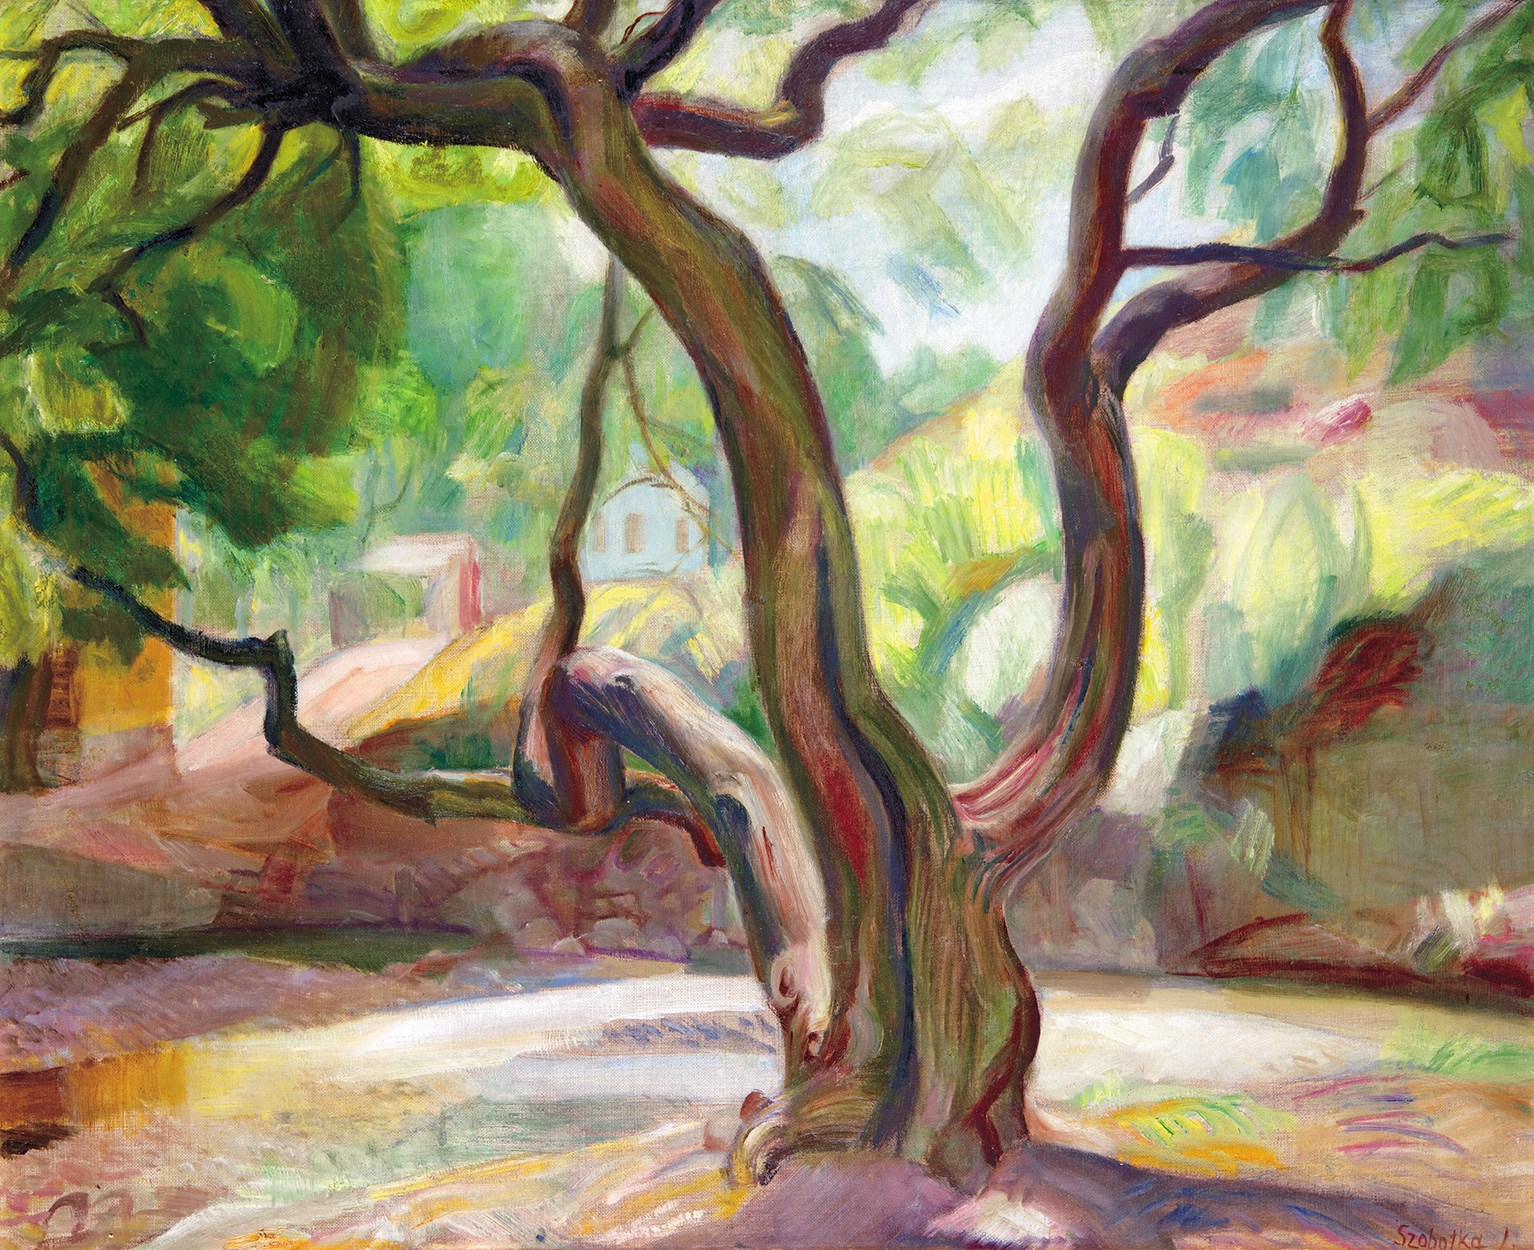 Szobotka Imre (1890-1961) Walnut Tree, around 1937